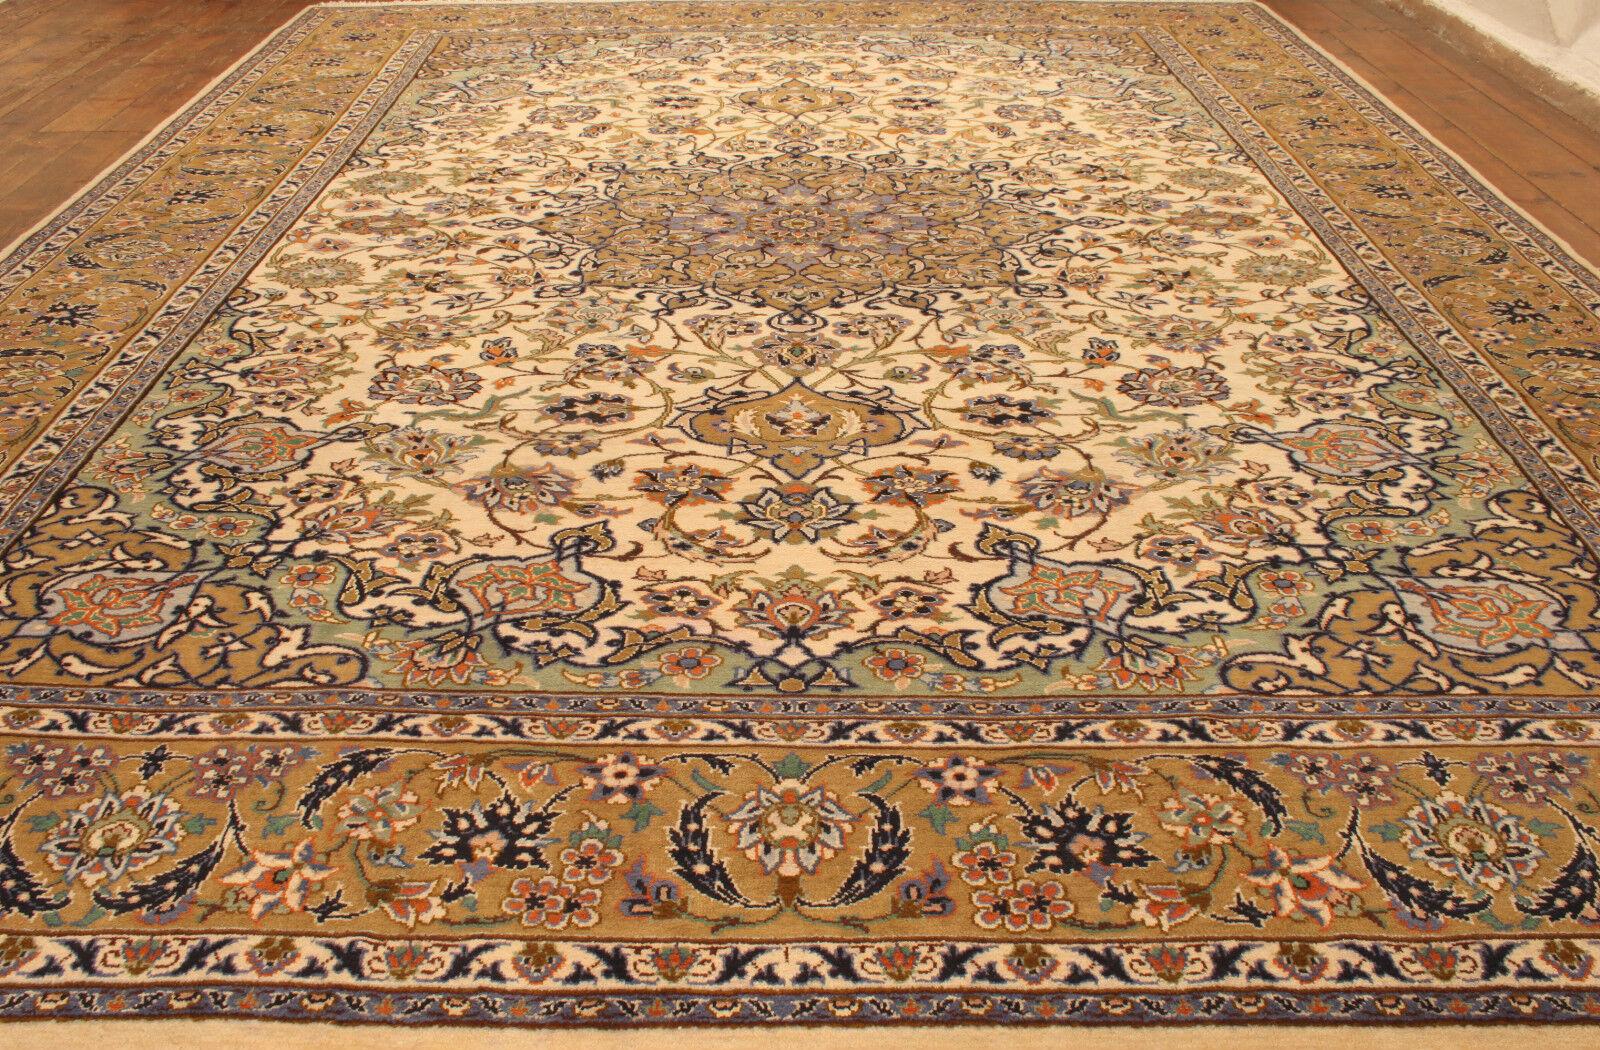 Handmade Contemporary Isfahan Rug 9.6' x 12.7' (295cm x 390cm), 2000s - 1T02 For Sale 6